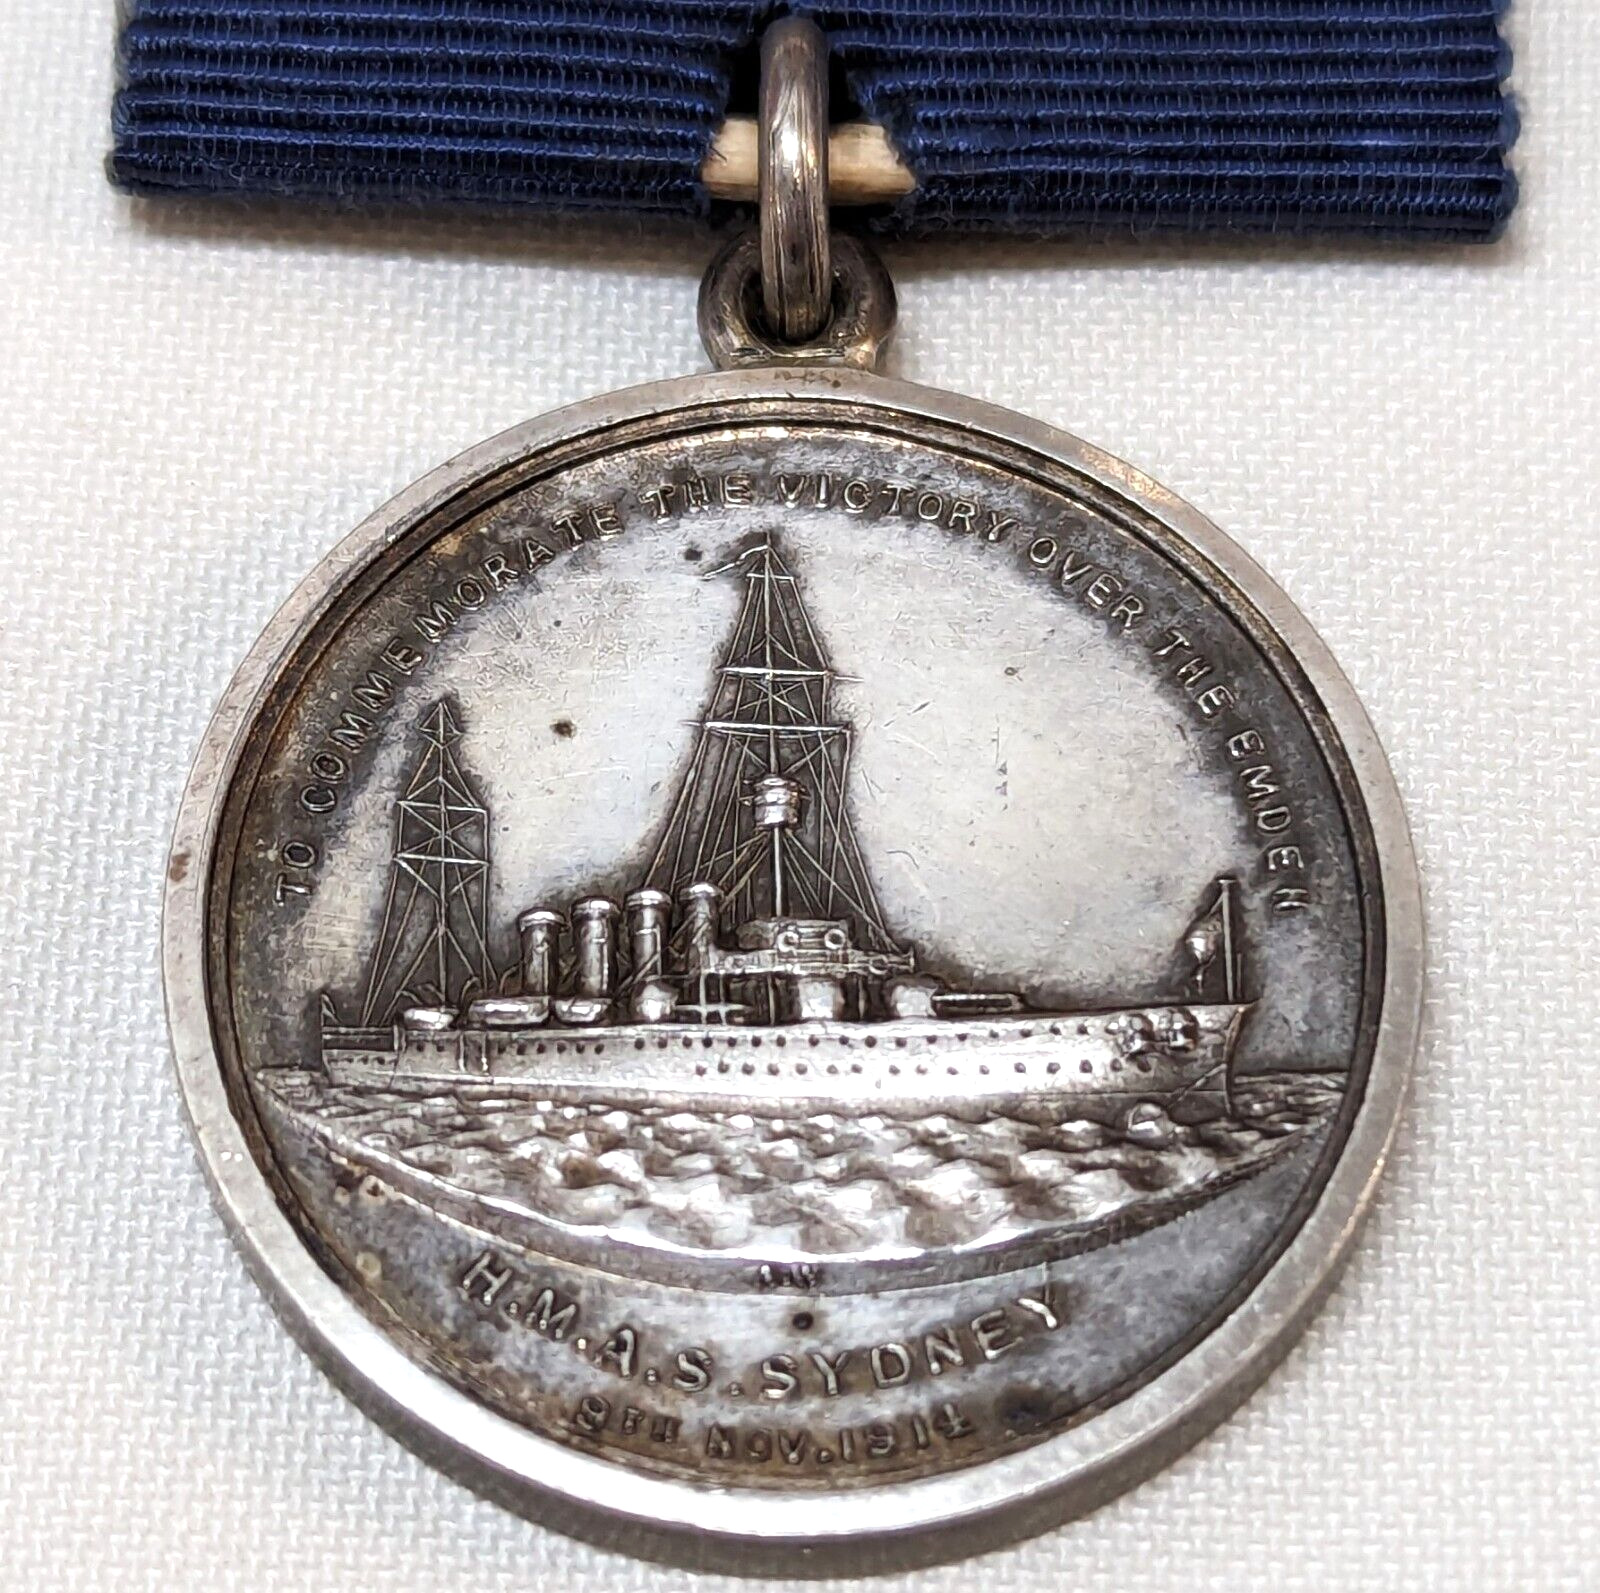 WW1 Western Australia ‘H.M.A.S. Sydney’ Emden action silver commemoration medal